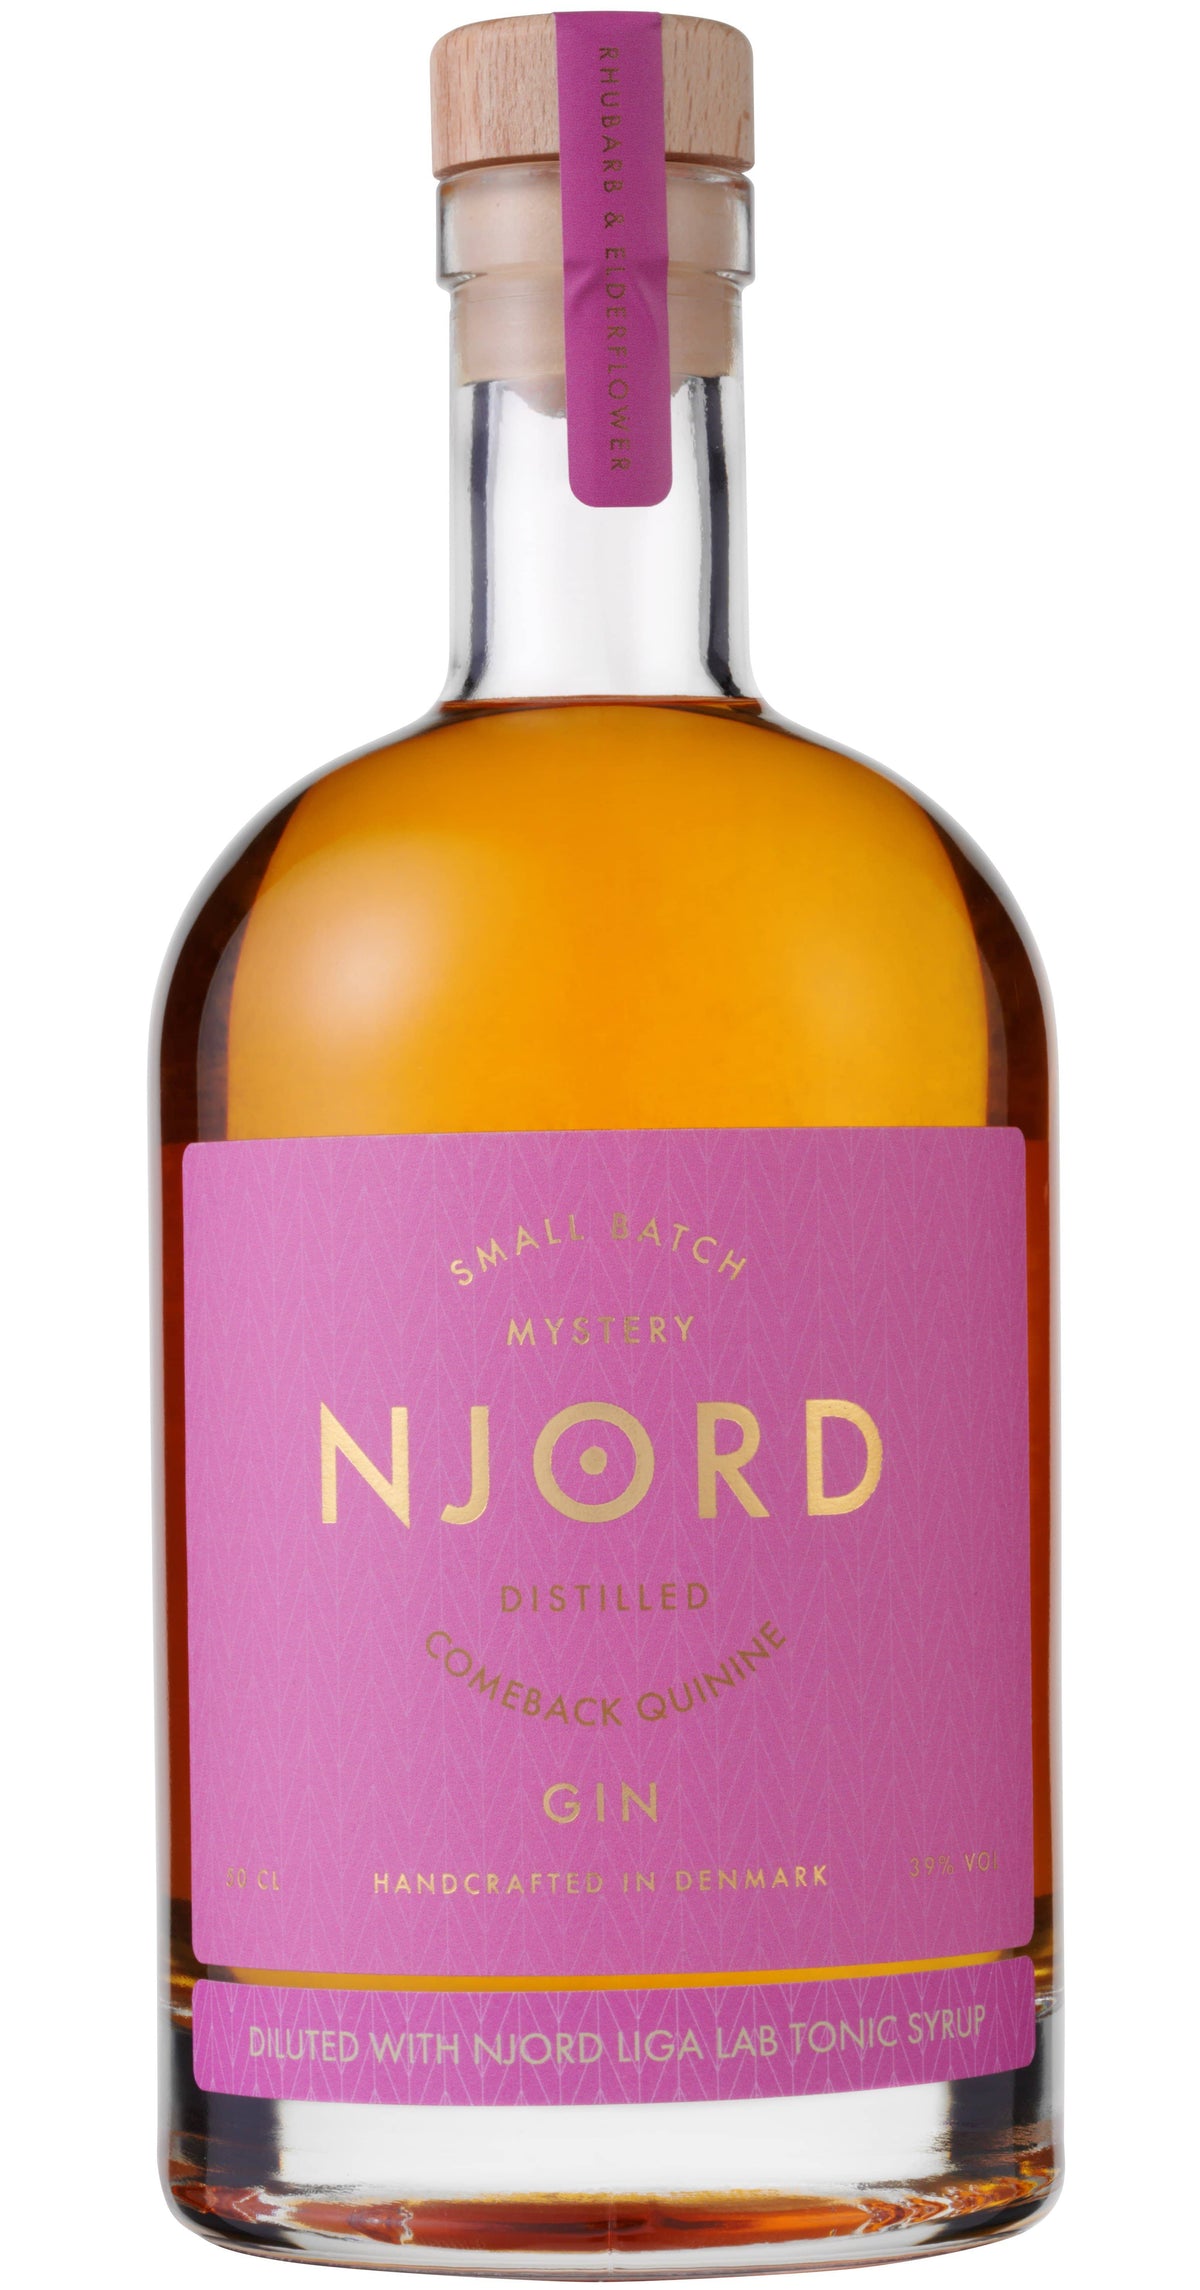 Distilled Comeback Quinine gin bottle - Njord Ligalab tonic syrup edition-front